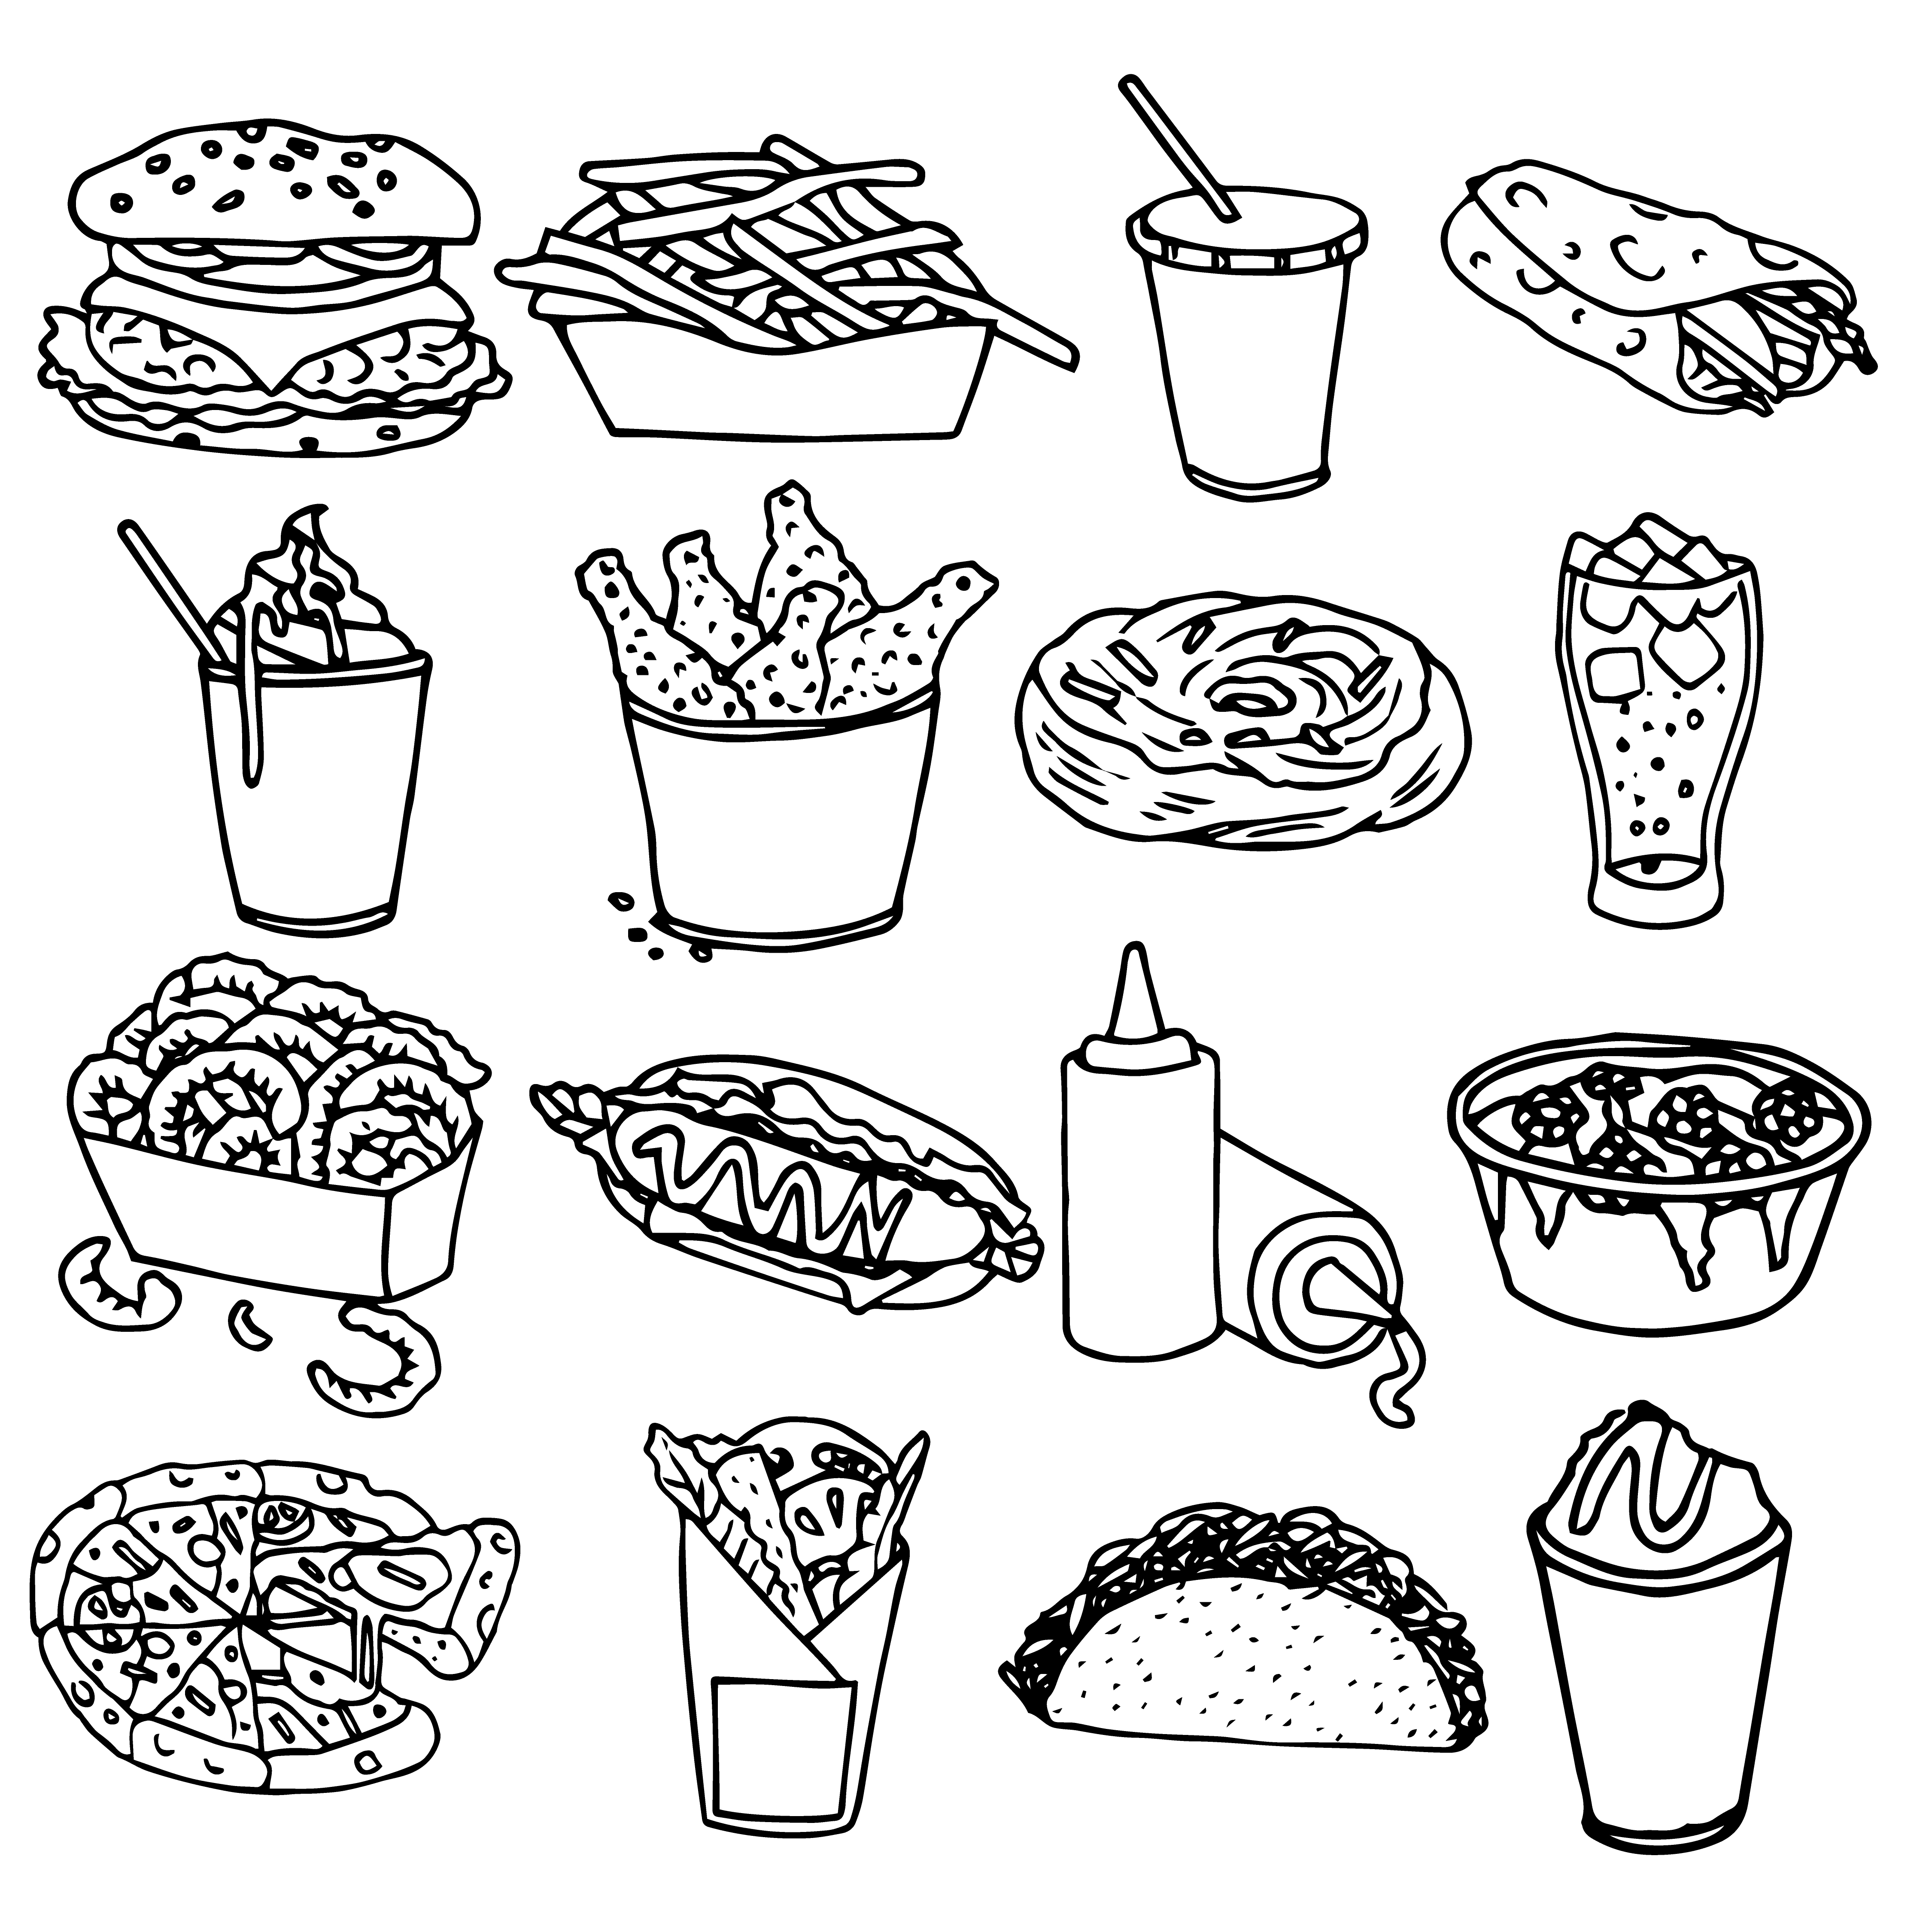 Fast food menu icons black outline - Download Free Vectors ...